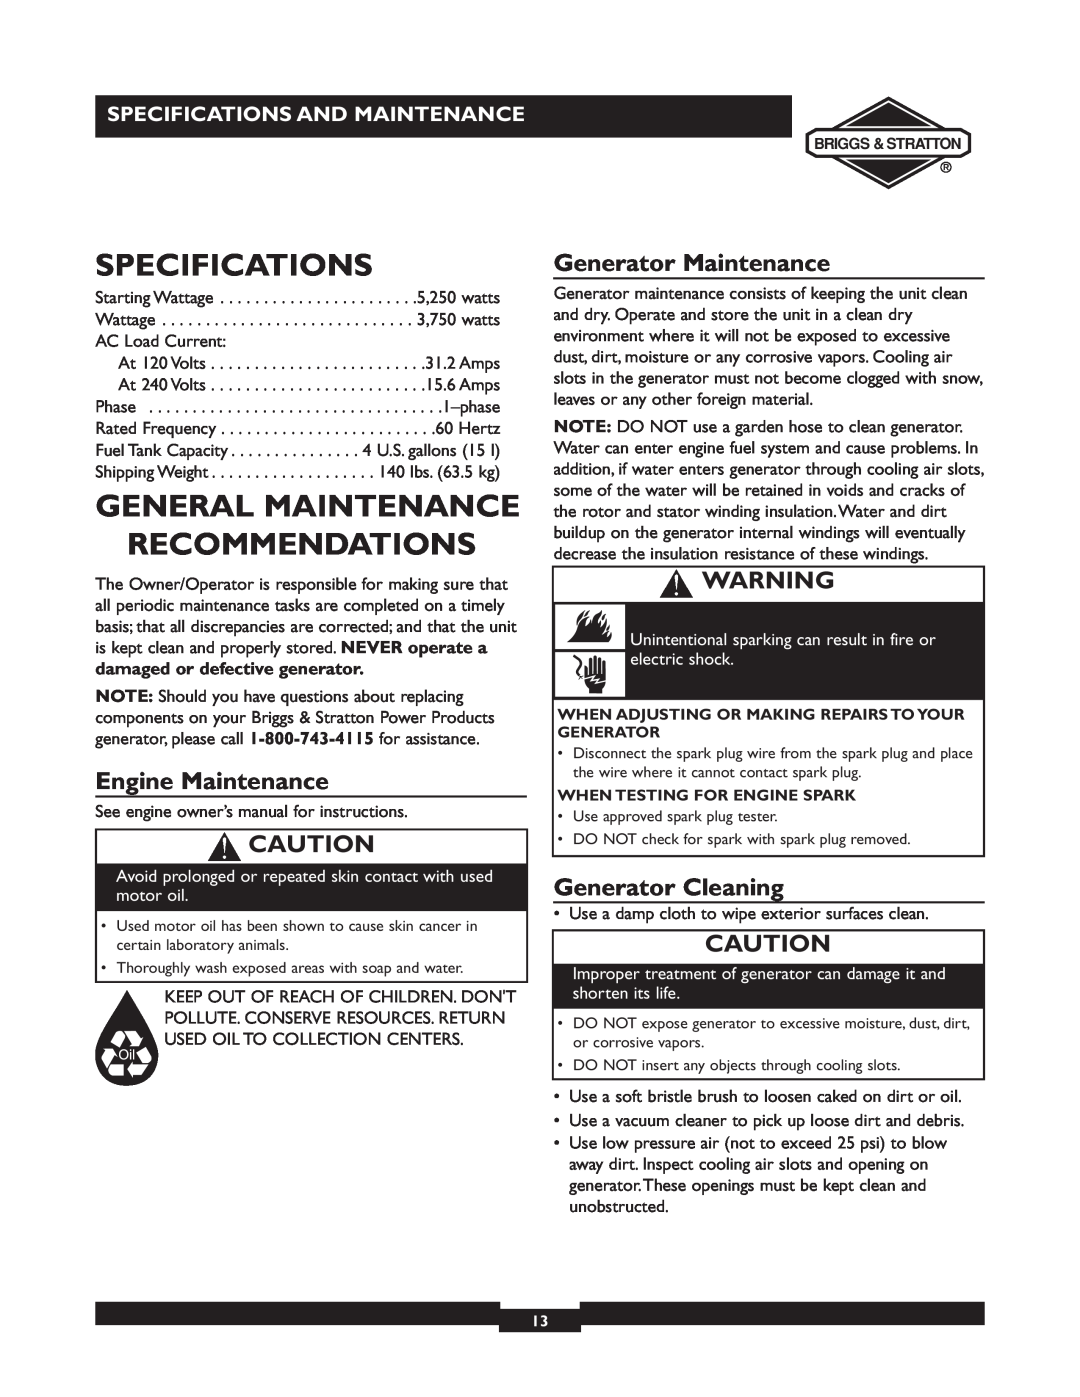 Briggs & Stratton 30238 Specifications, General Maintenance Recommendations, Engine Maintenance, Generator Maintenance 